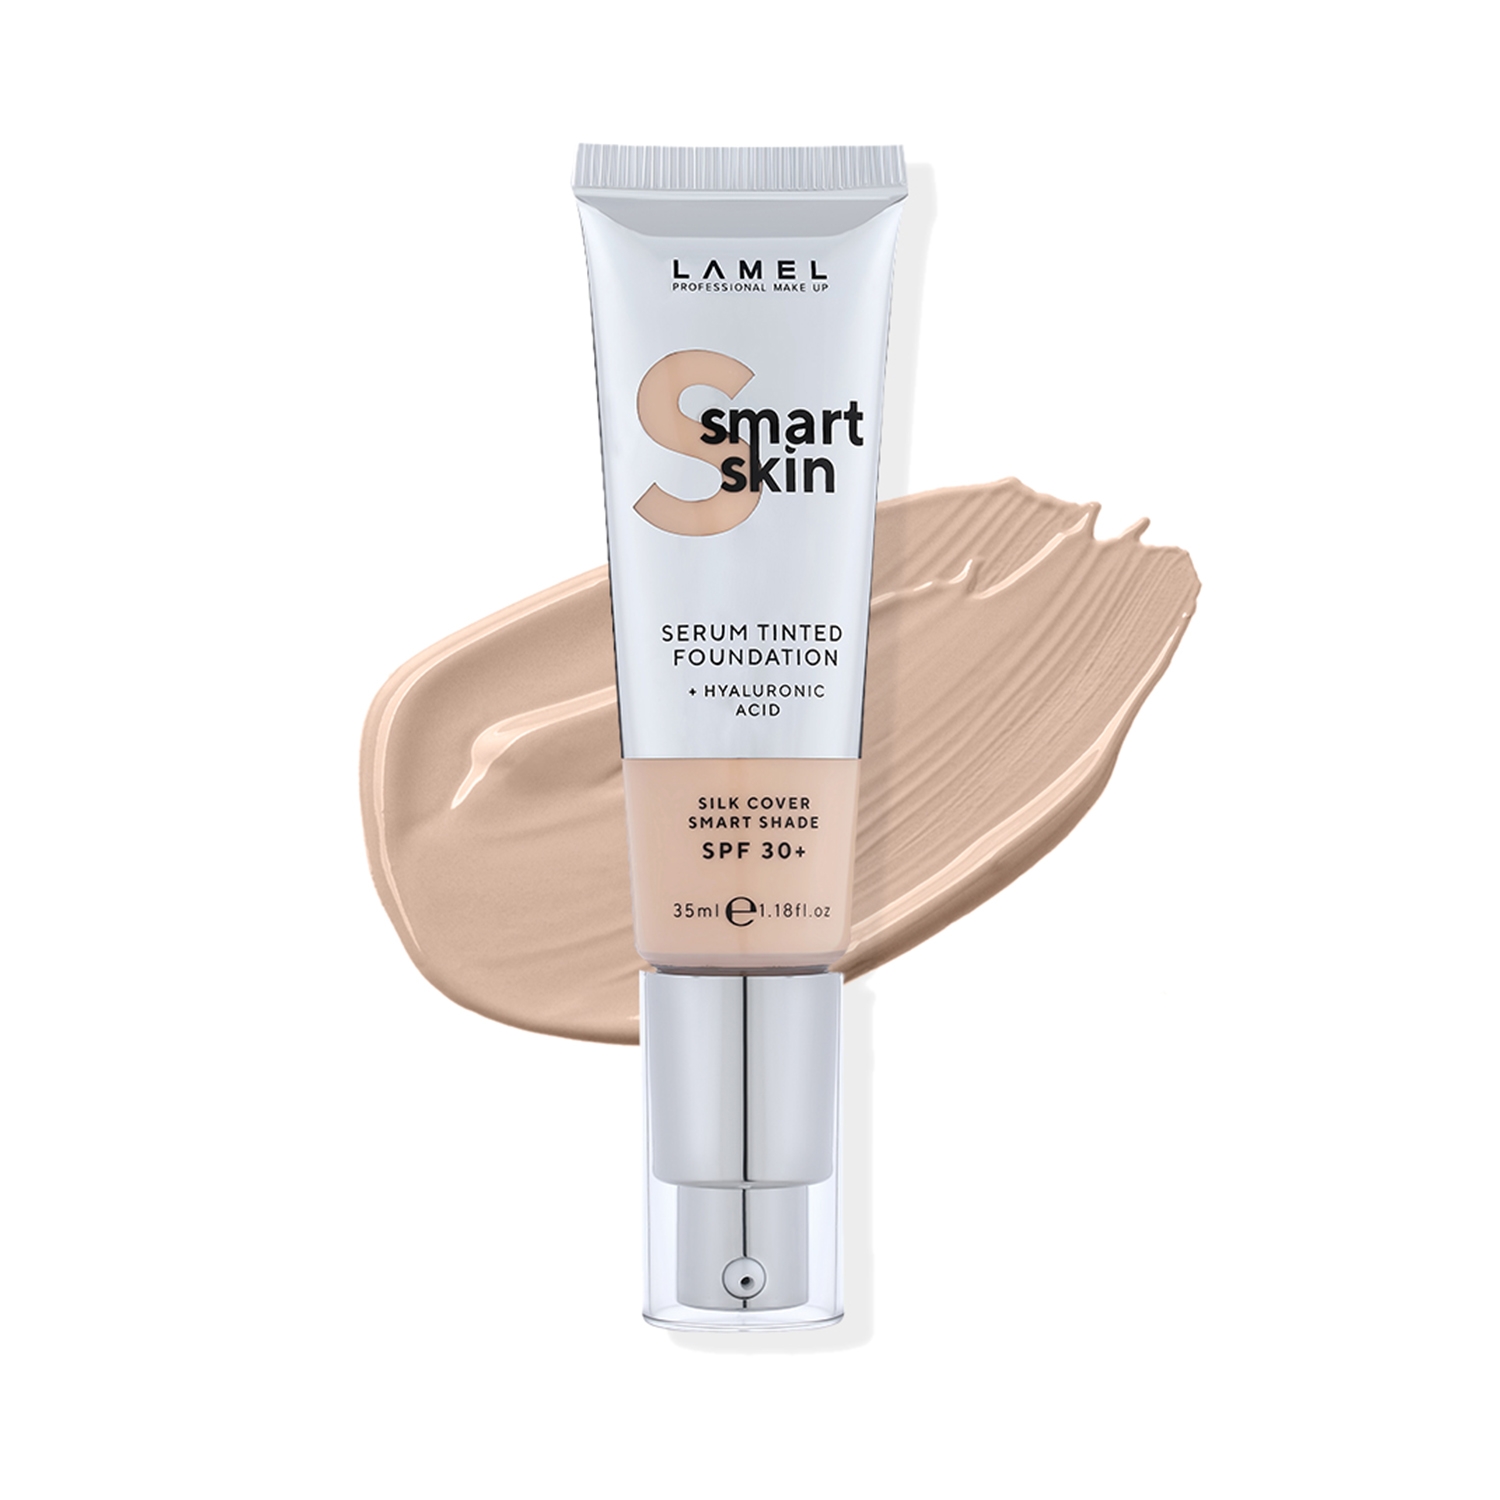 Lamel | Lamel Smart Skin Serum Tinted Foundation SPF 30+ - N 401 Porcelain (35ml)